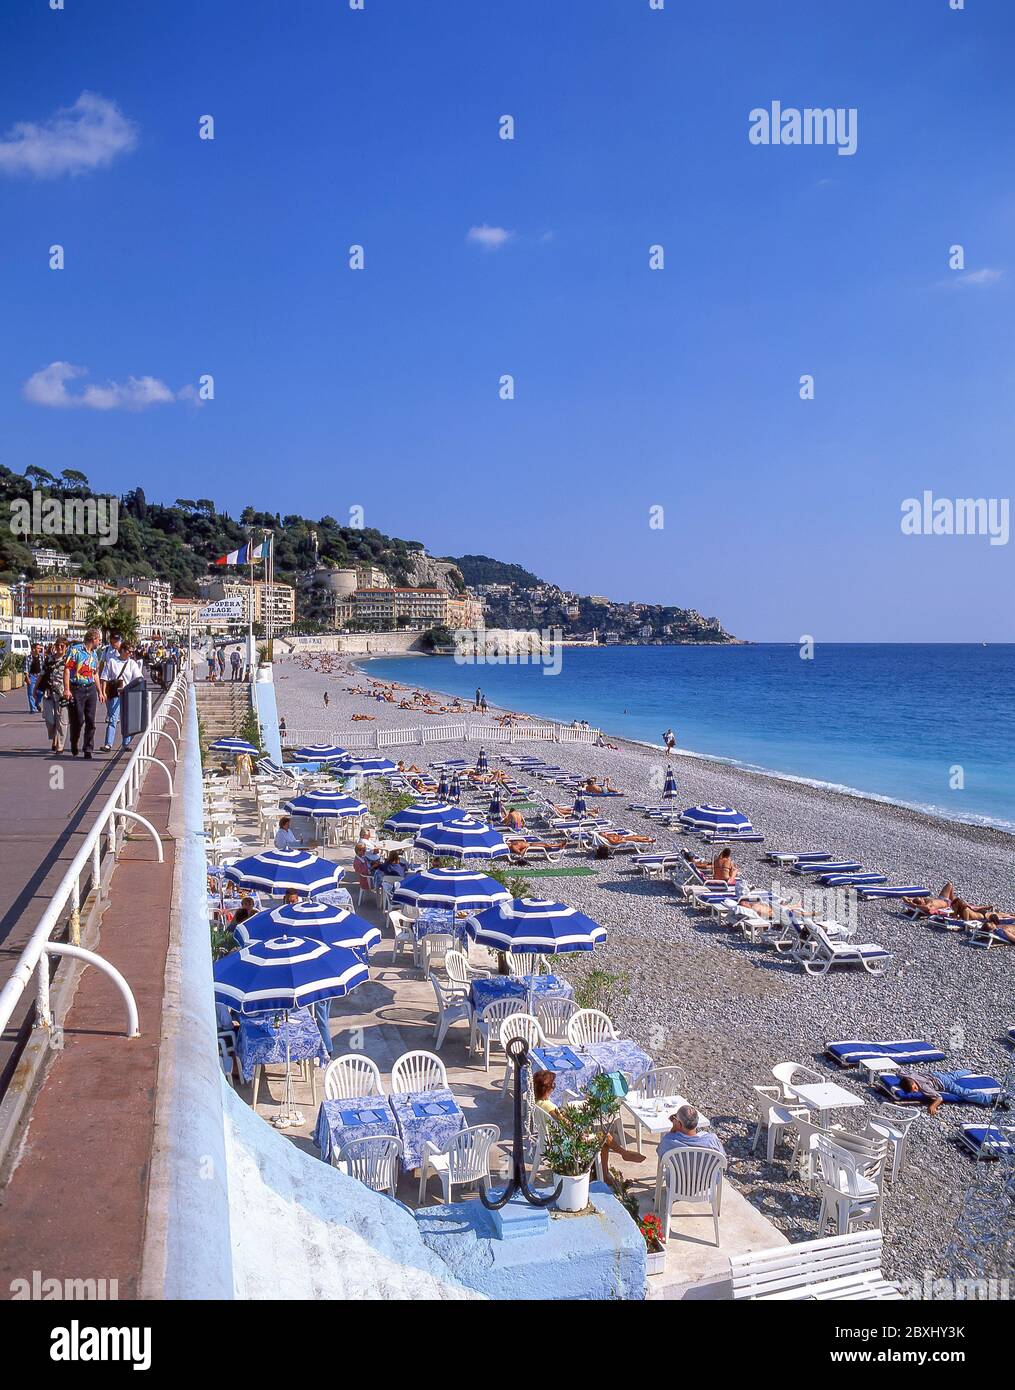 Opera Plage bar and restaurant, Promenade des Anglais, Nice, Côte d'Azur, Alpes-Maritimes, Provence-Alpes-Côte d'Azur, France Stock Photo